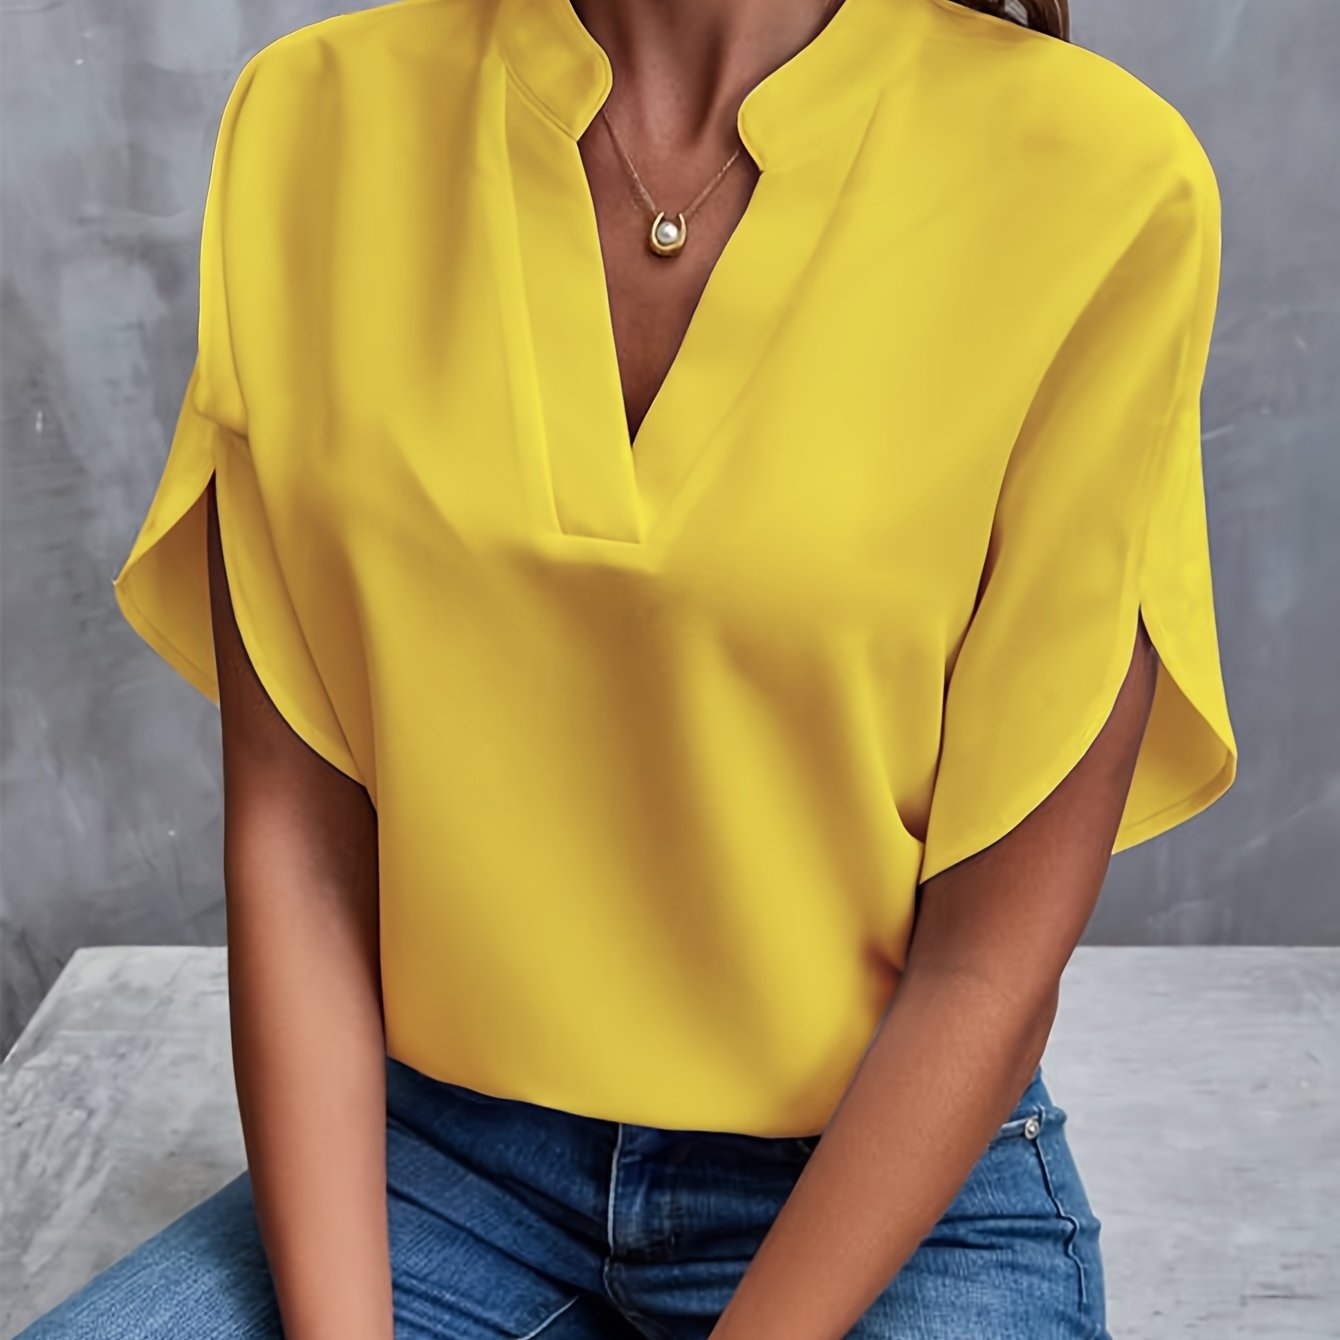 Vienna - Elegant blouse